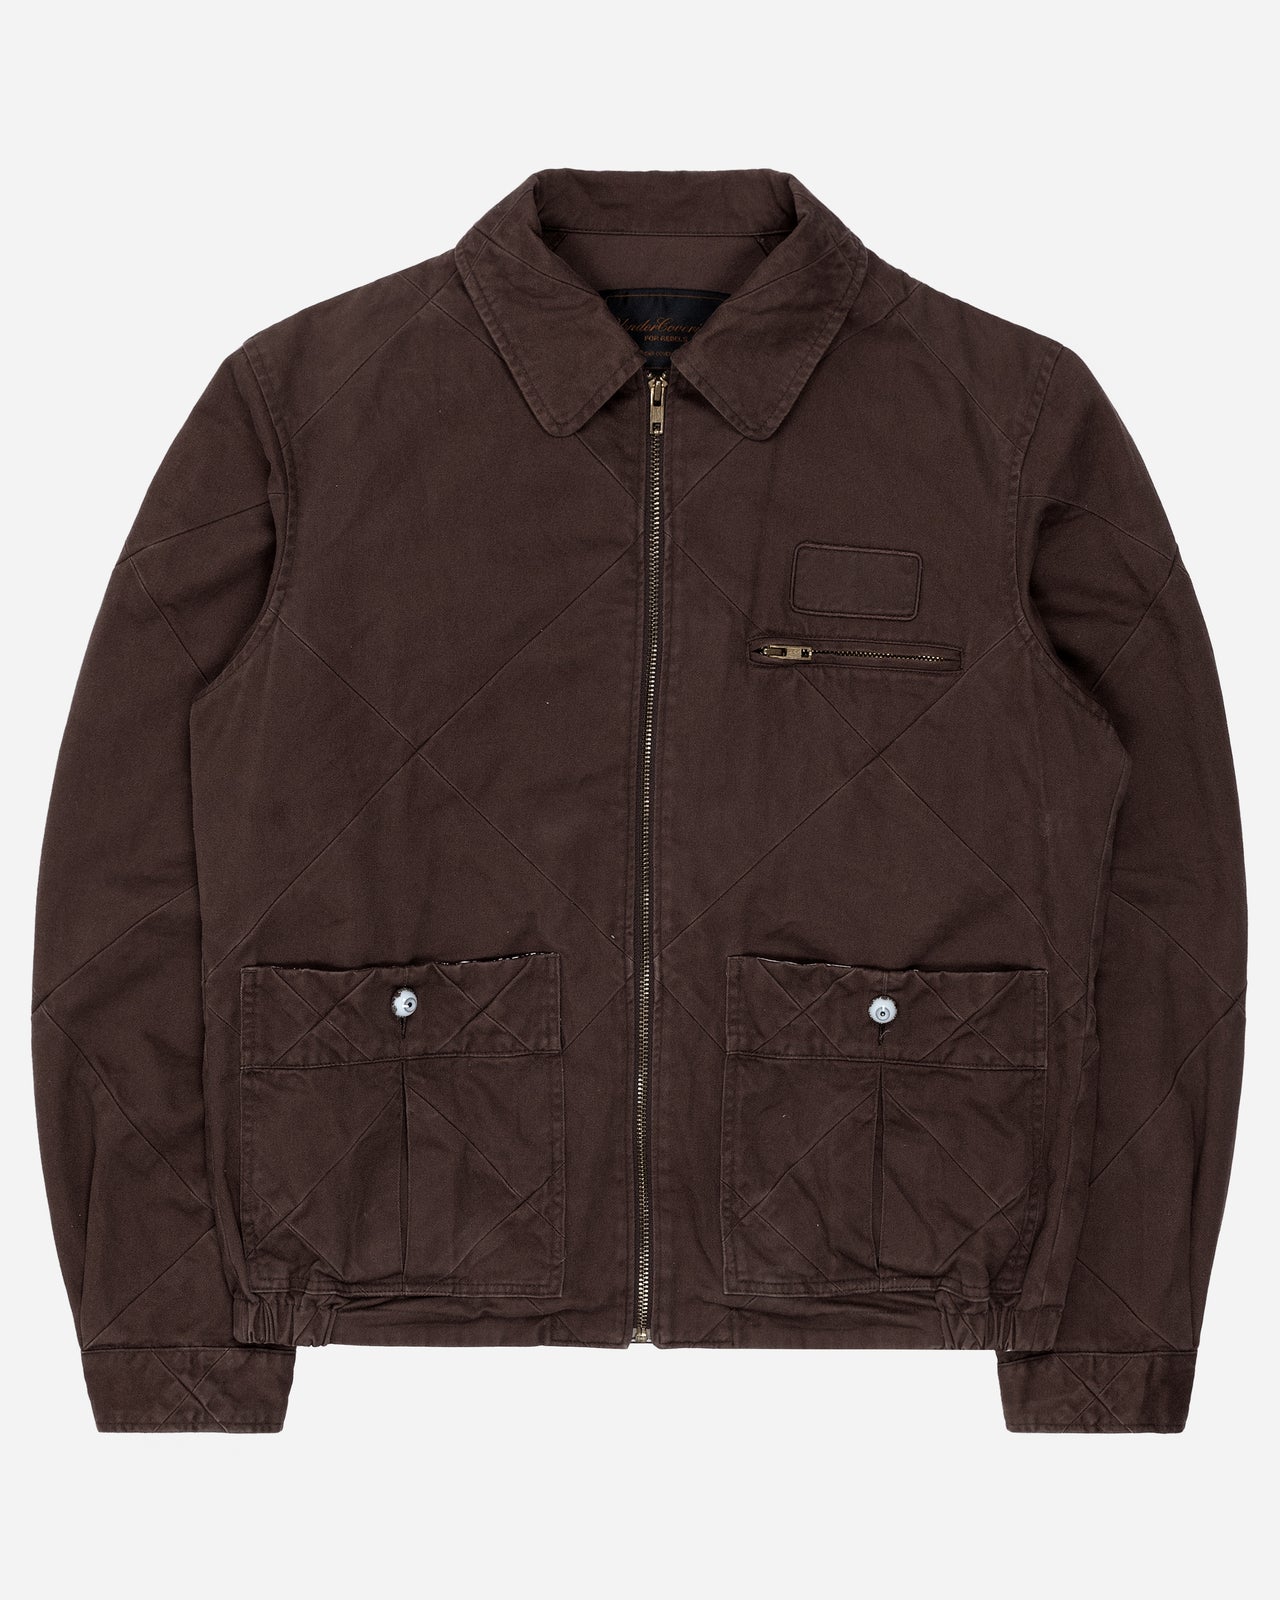 Undercover Brown Paneled Zip-Up Work Jacket - SS05 “BBII Homage To Jan Svankmajer”